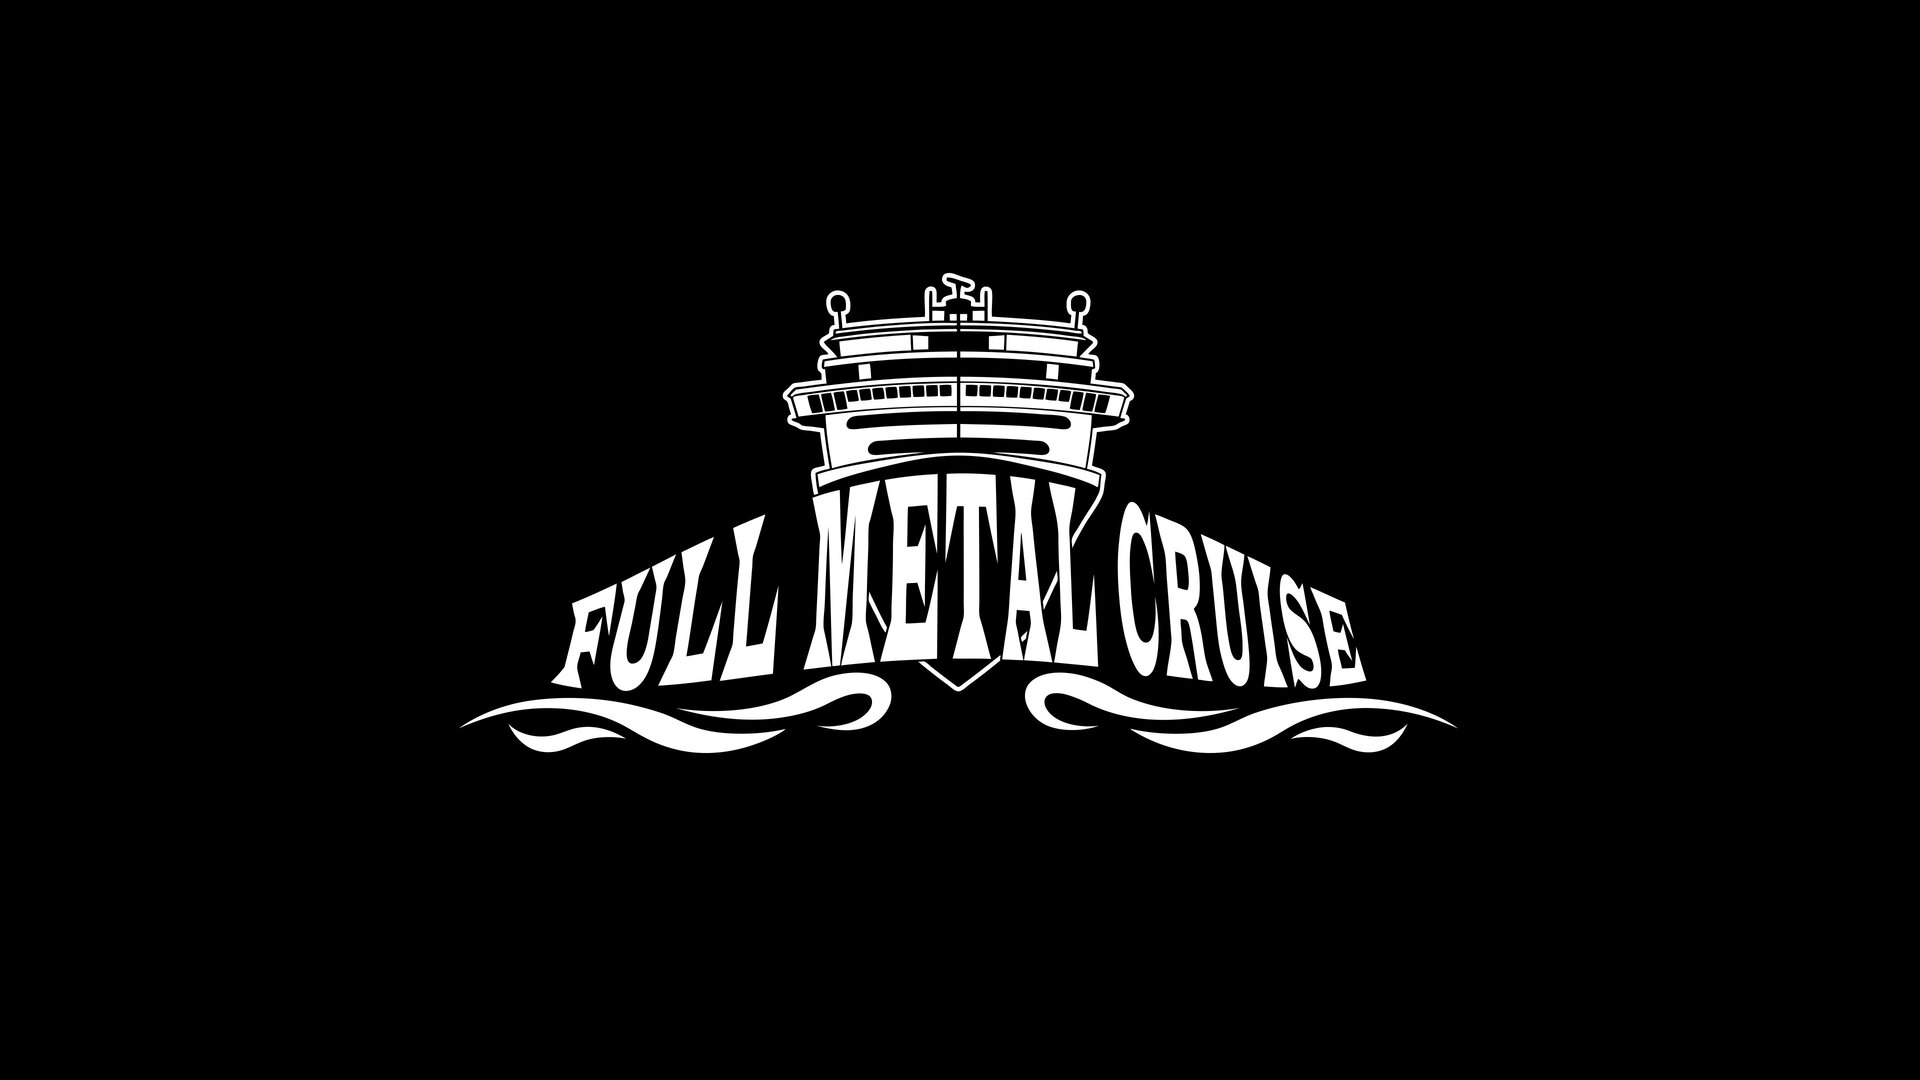 Full Metal Cruise X - die lauteste Kreuzfahrt Europas